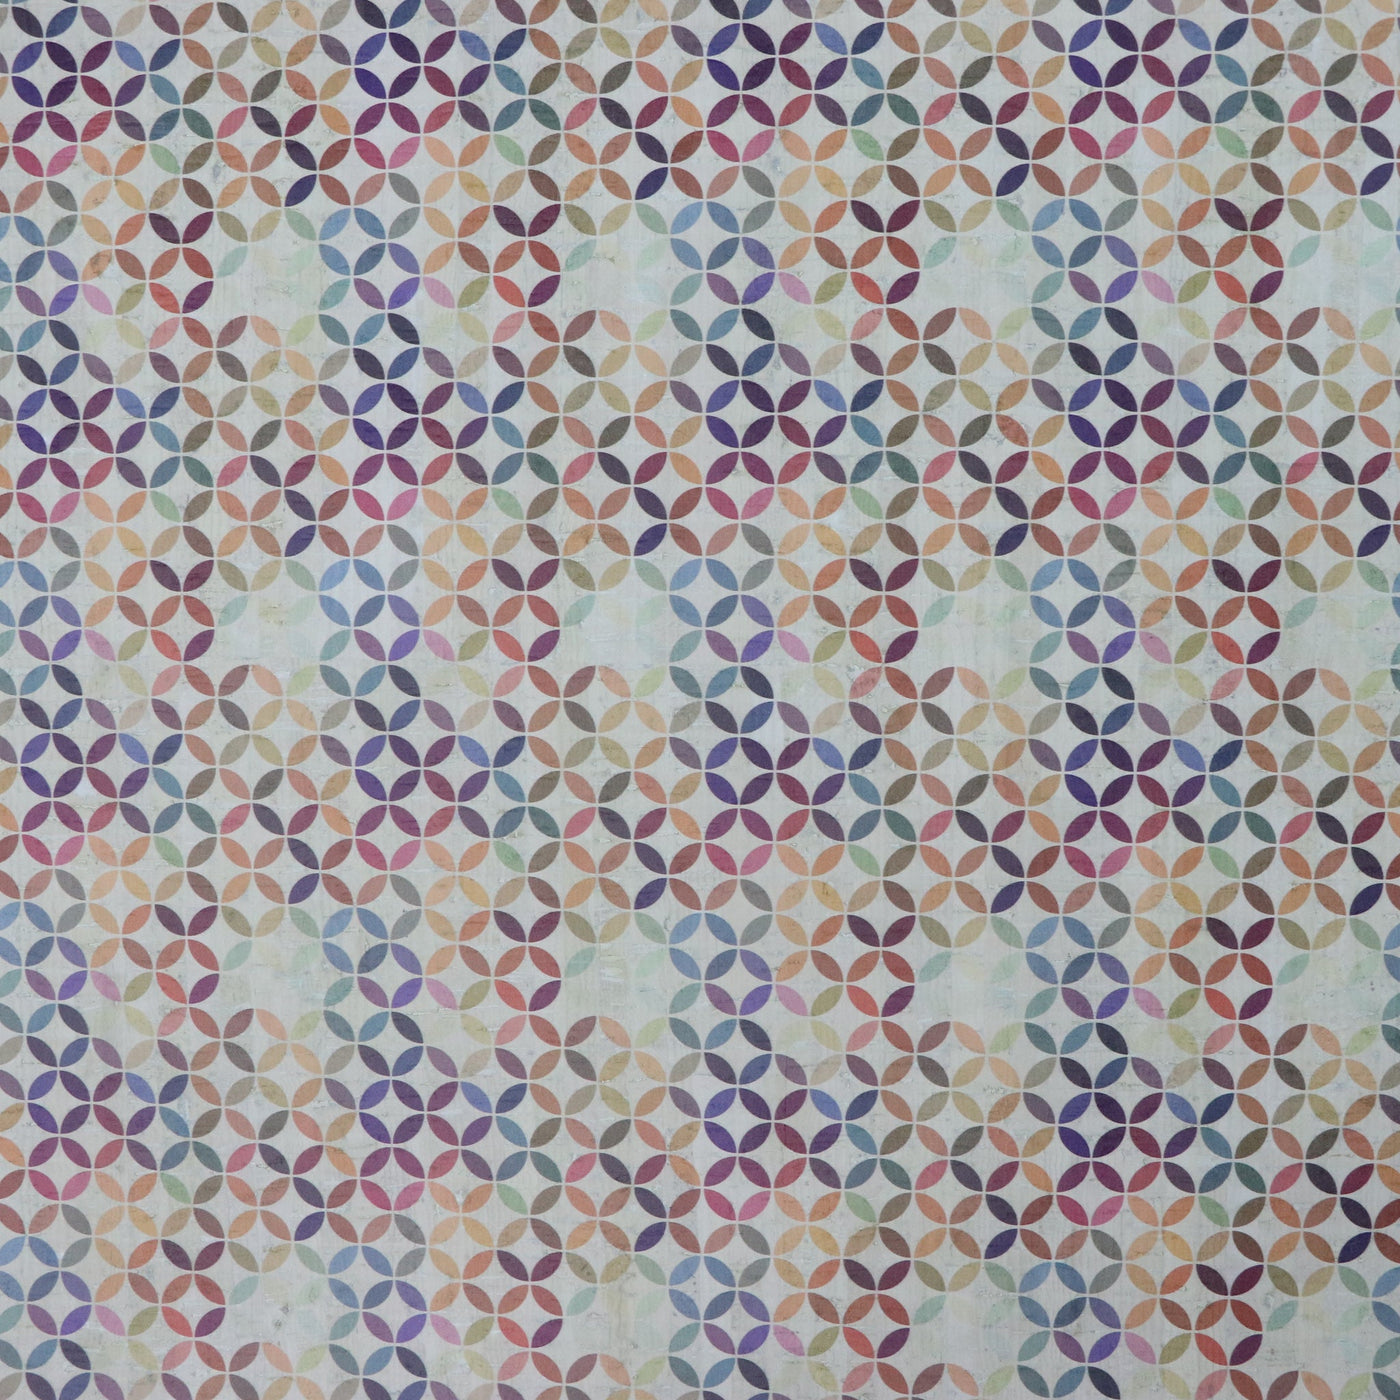 Packaged 1/2 Yard Cut: Rainbow Retro Art Cork Fabric